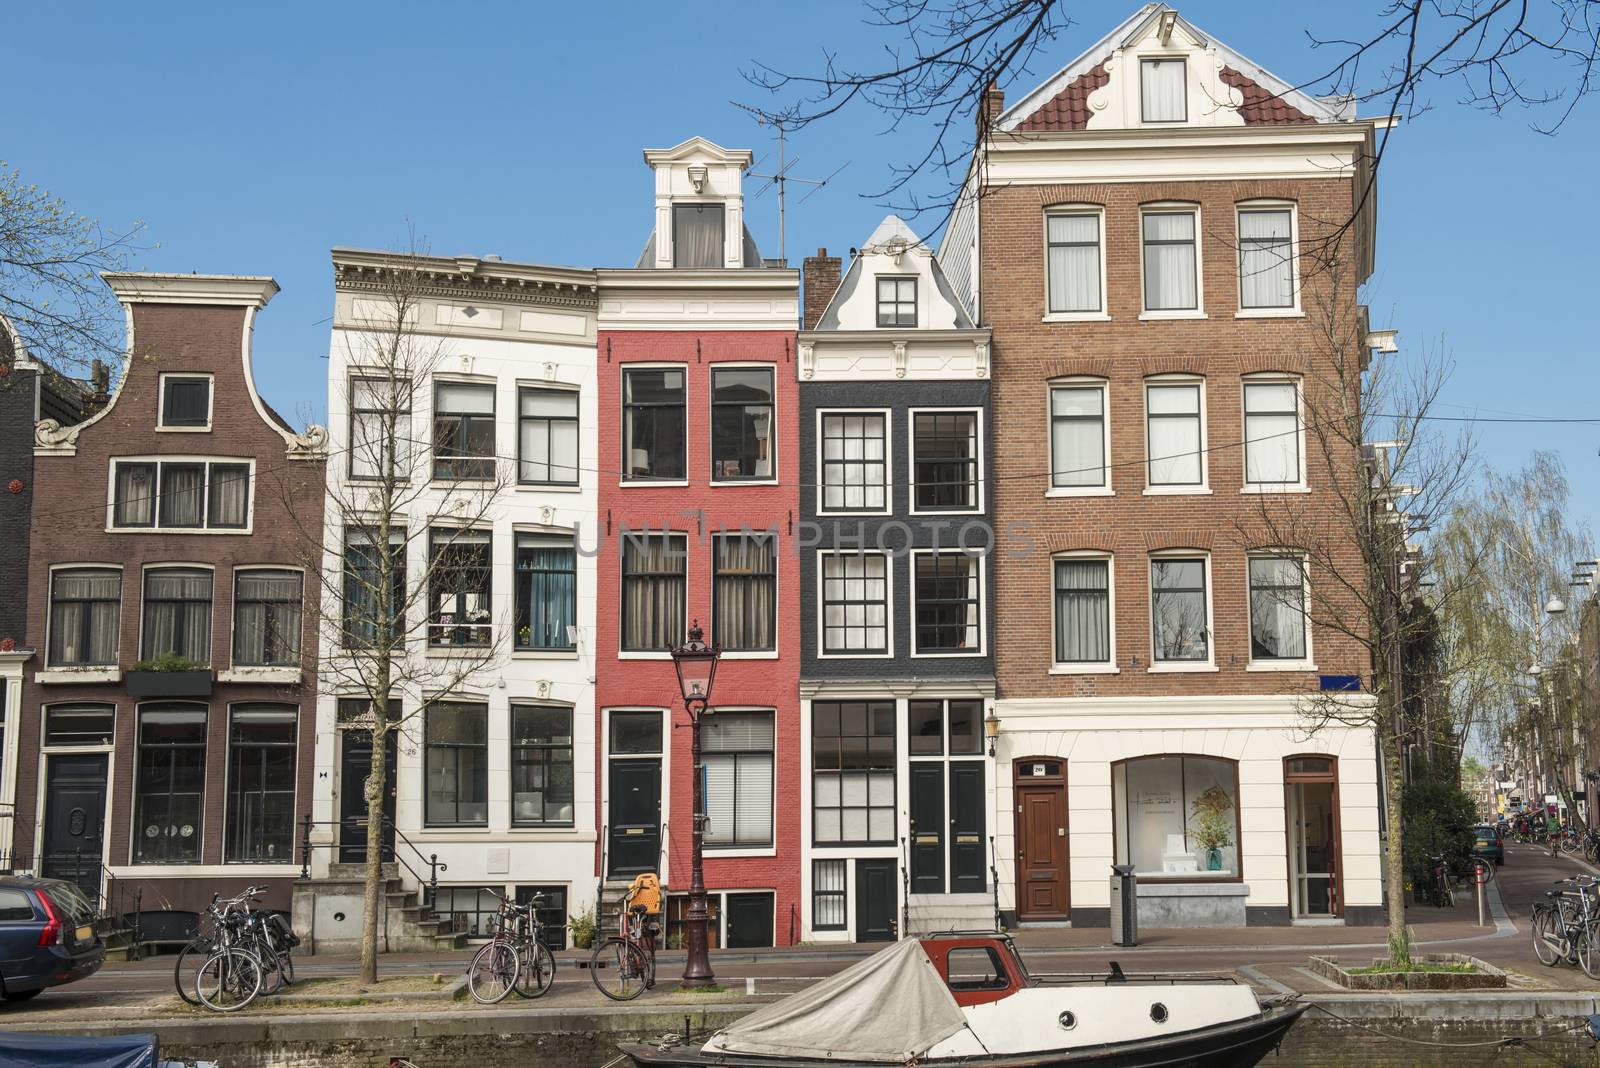 Amsterdam Architecture by Alenmax